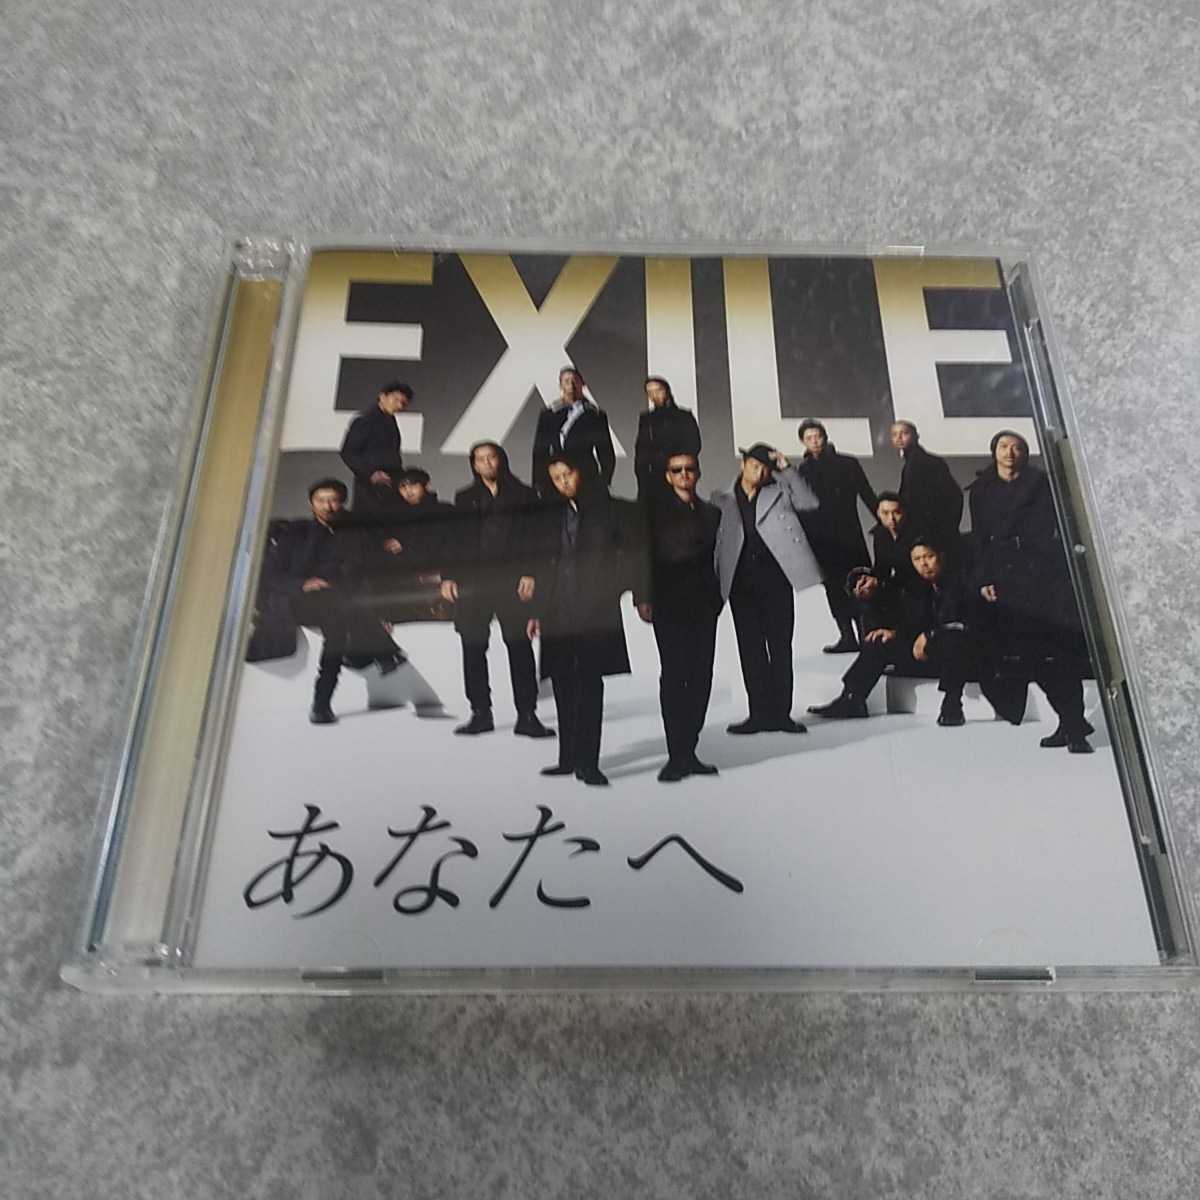 EXILE【あなたへ】EXILE ATSUSHI【Ooo Baby】2011年エイベックス　返金保証あり